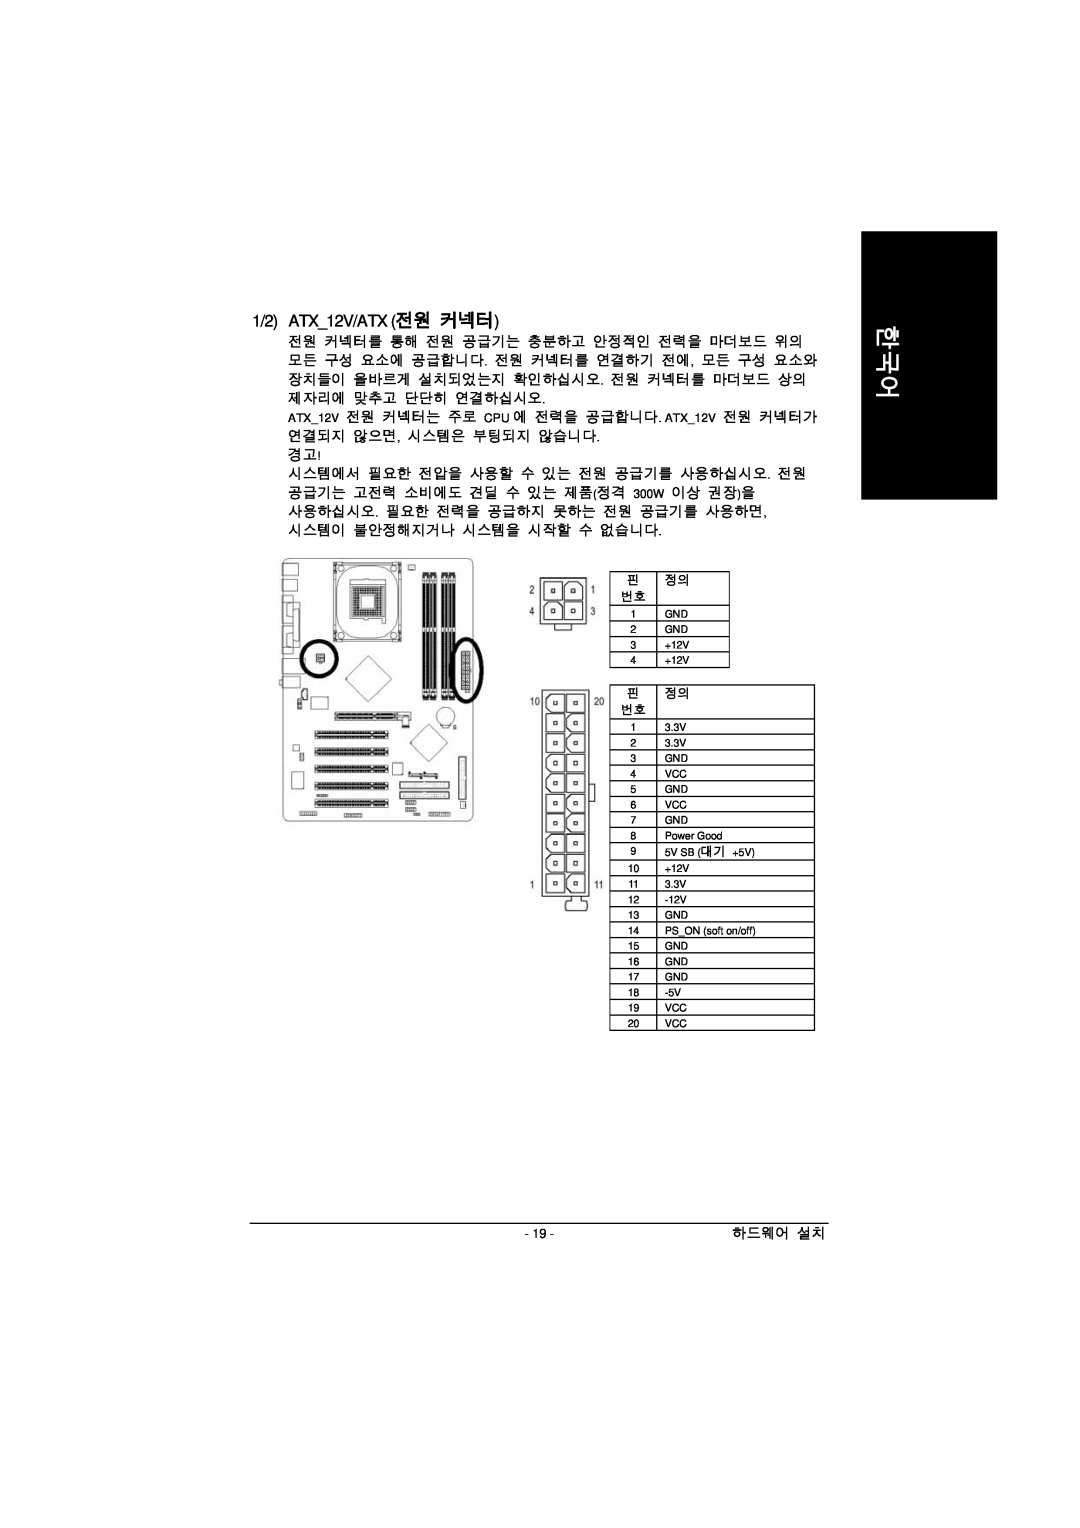 Intel GA-8IPE1000 manual 1/2 ATX12V/ATX 전원 커넥터 